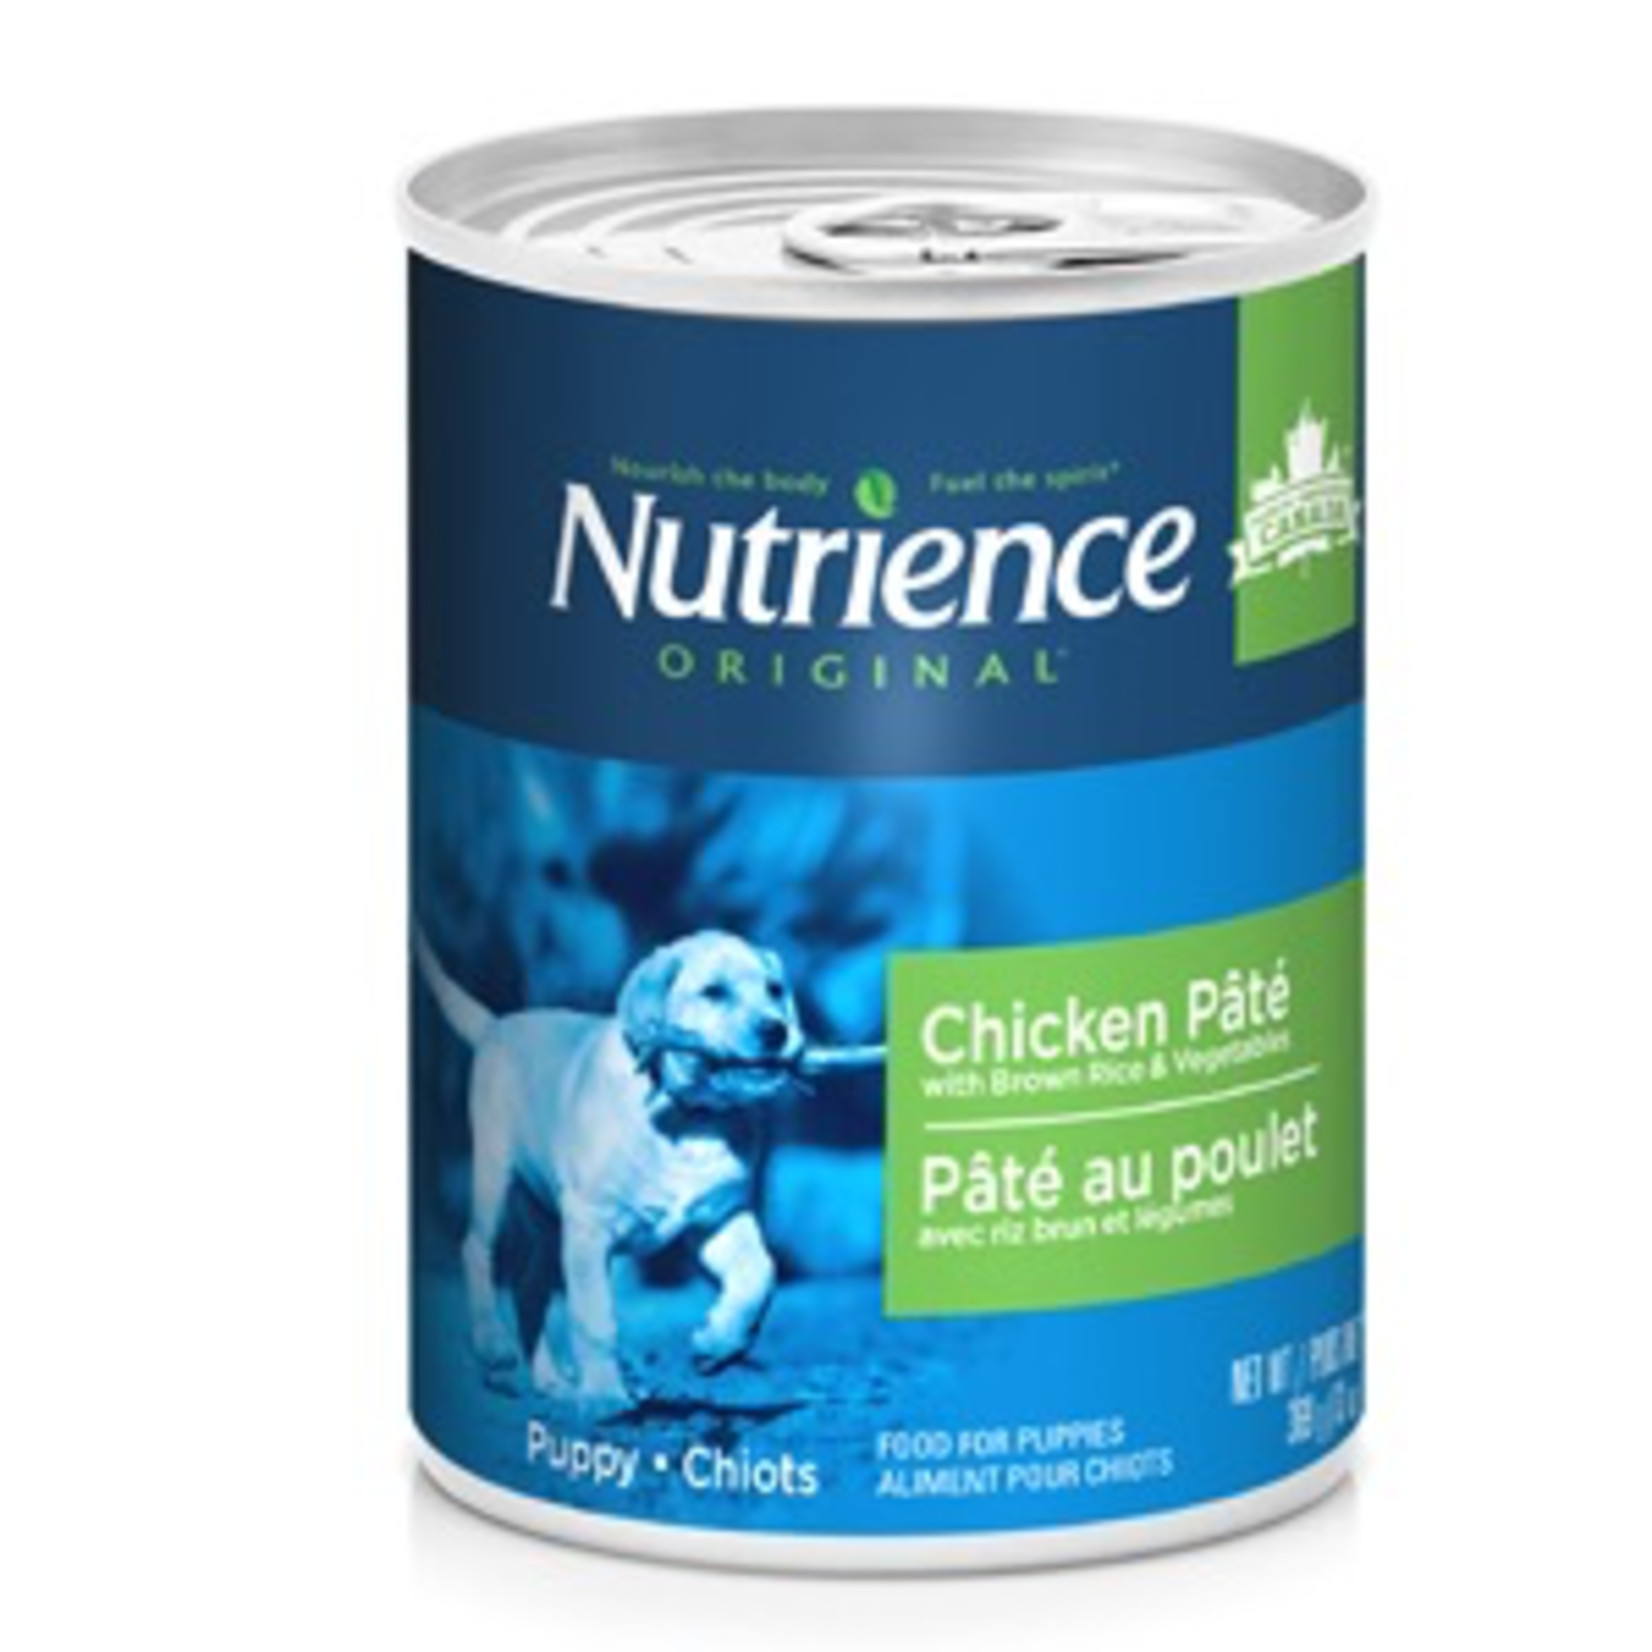 NUTRIENCE Nutrience Original Puppy - Chicken Pâté with Brown Rice & Vegetables - 369 g (13 oz)